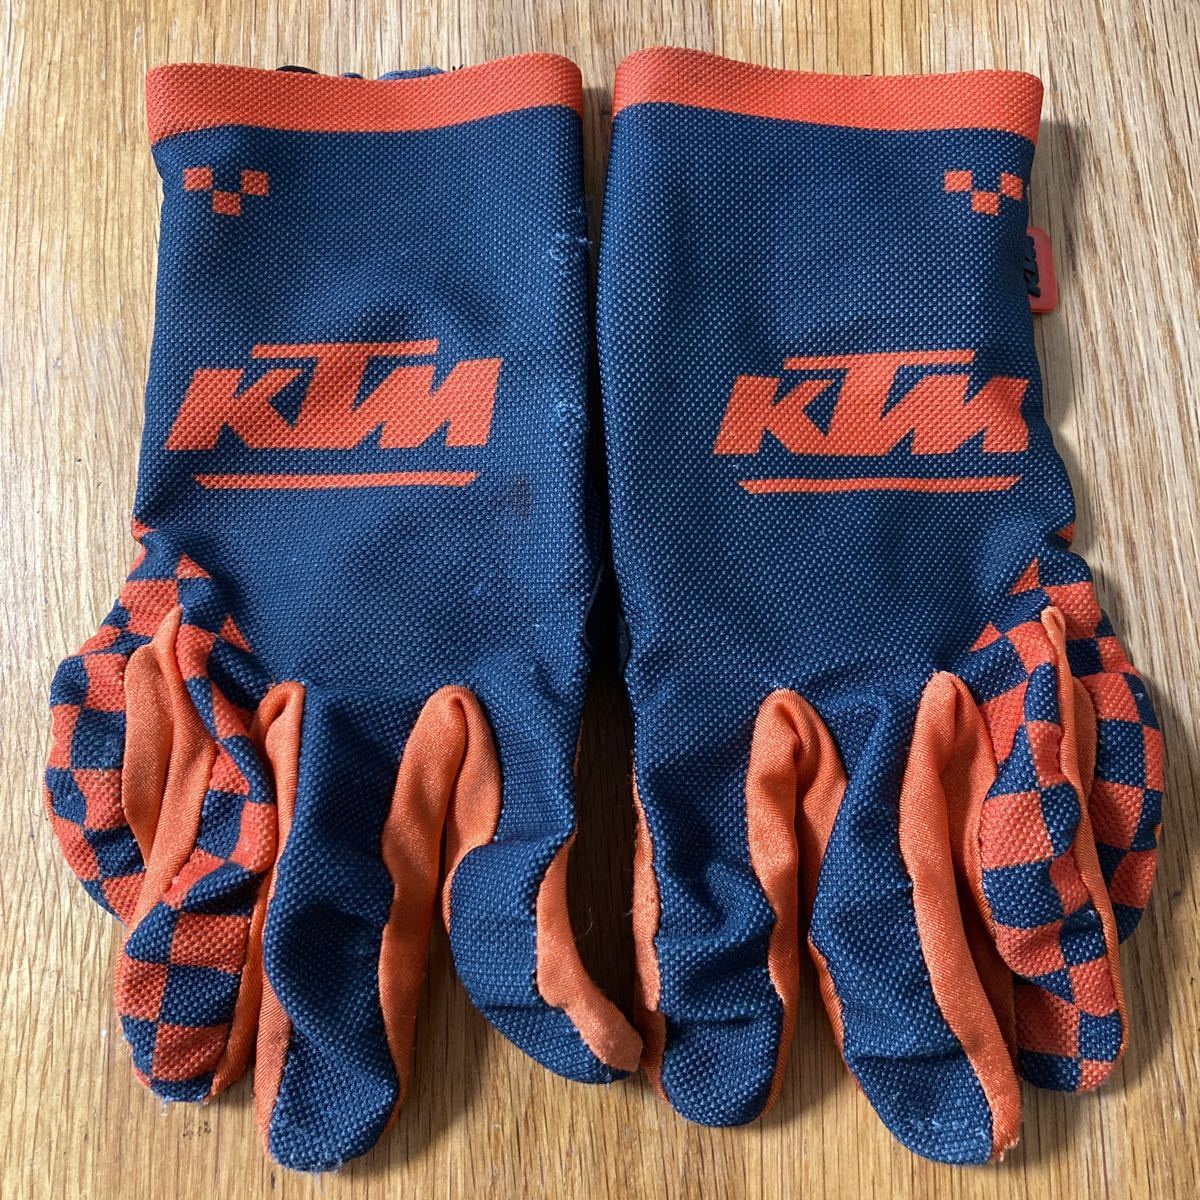 KTM POWER WEAR Gloves オフロード モトクロス バイク MXグローブ Mサイズ 薄手 ユーズド